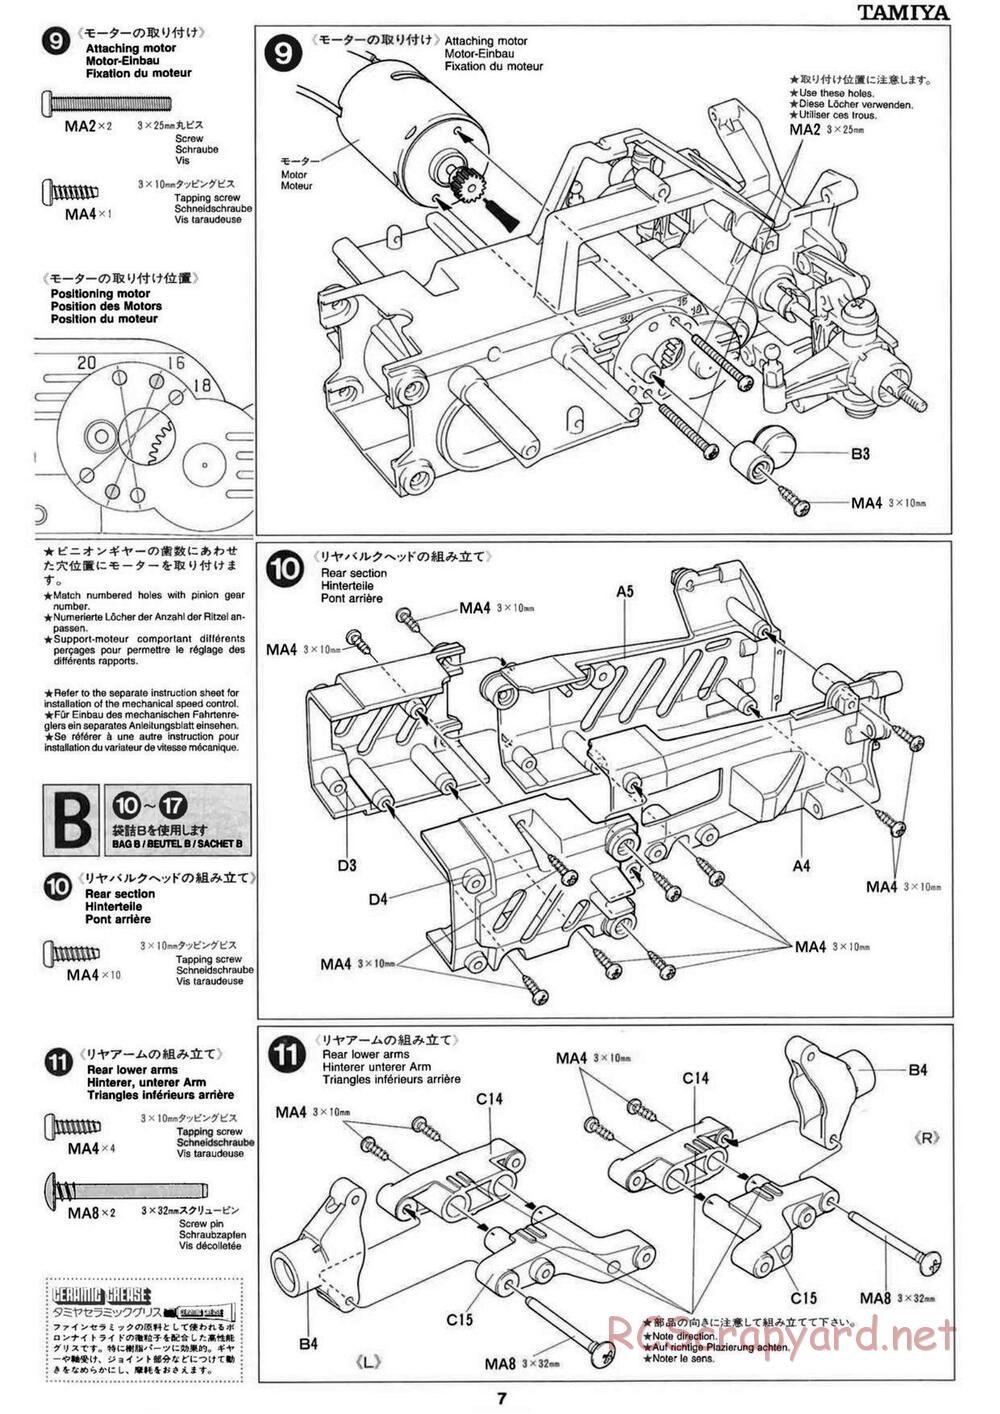 Tamiya - FF-02 Chassis - Manual - Page 7